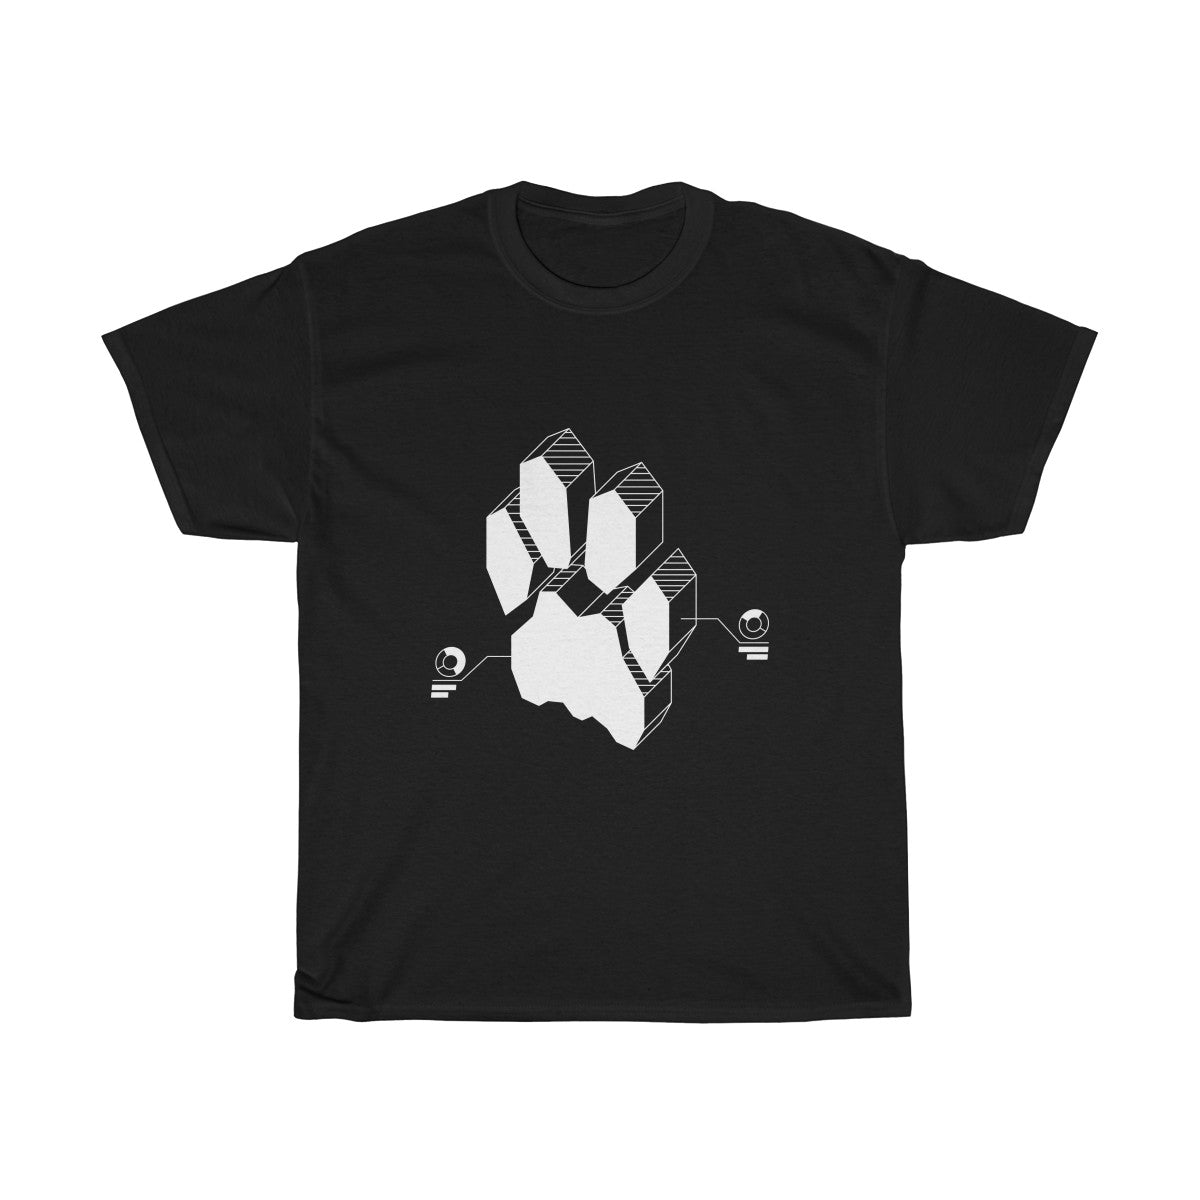 Techno Feline - T-Shirt T-Shirt Wexon Black S 